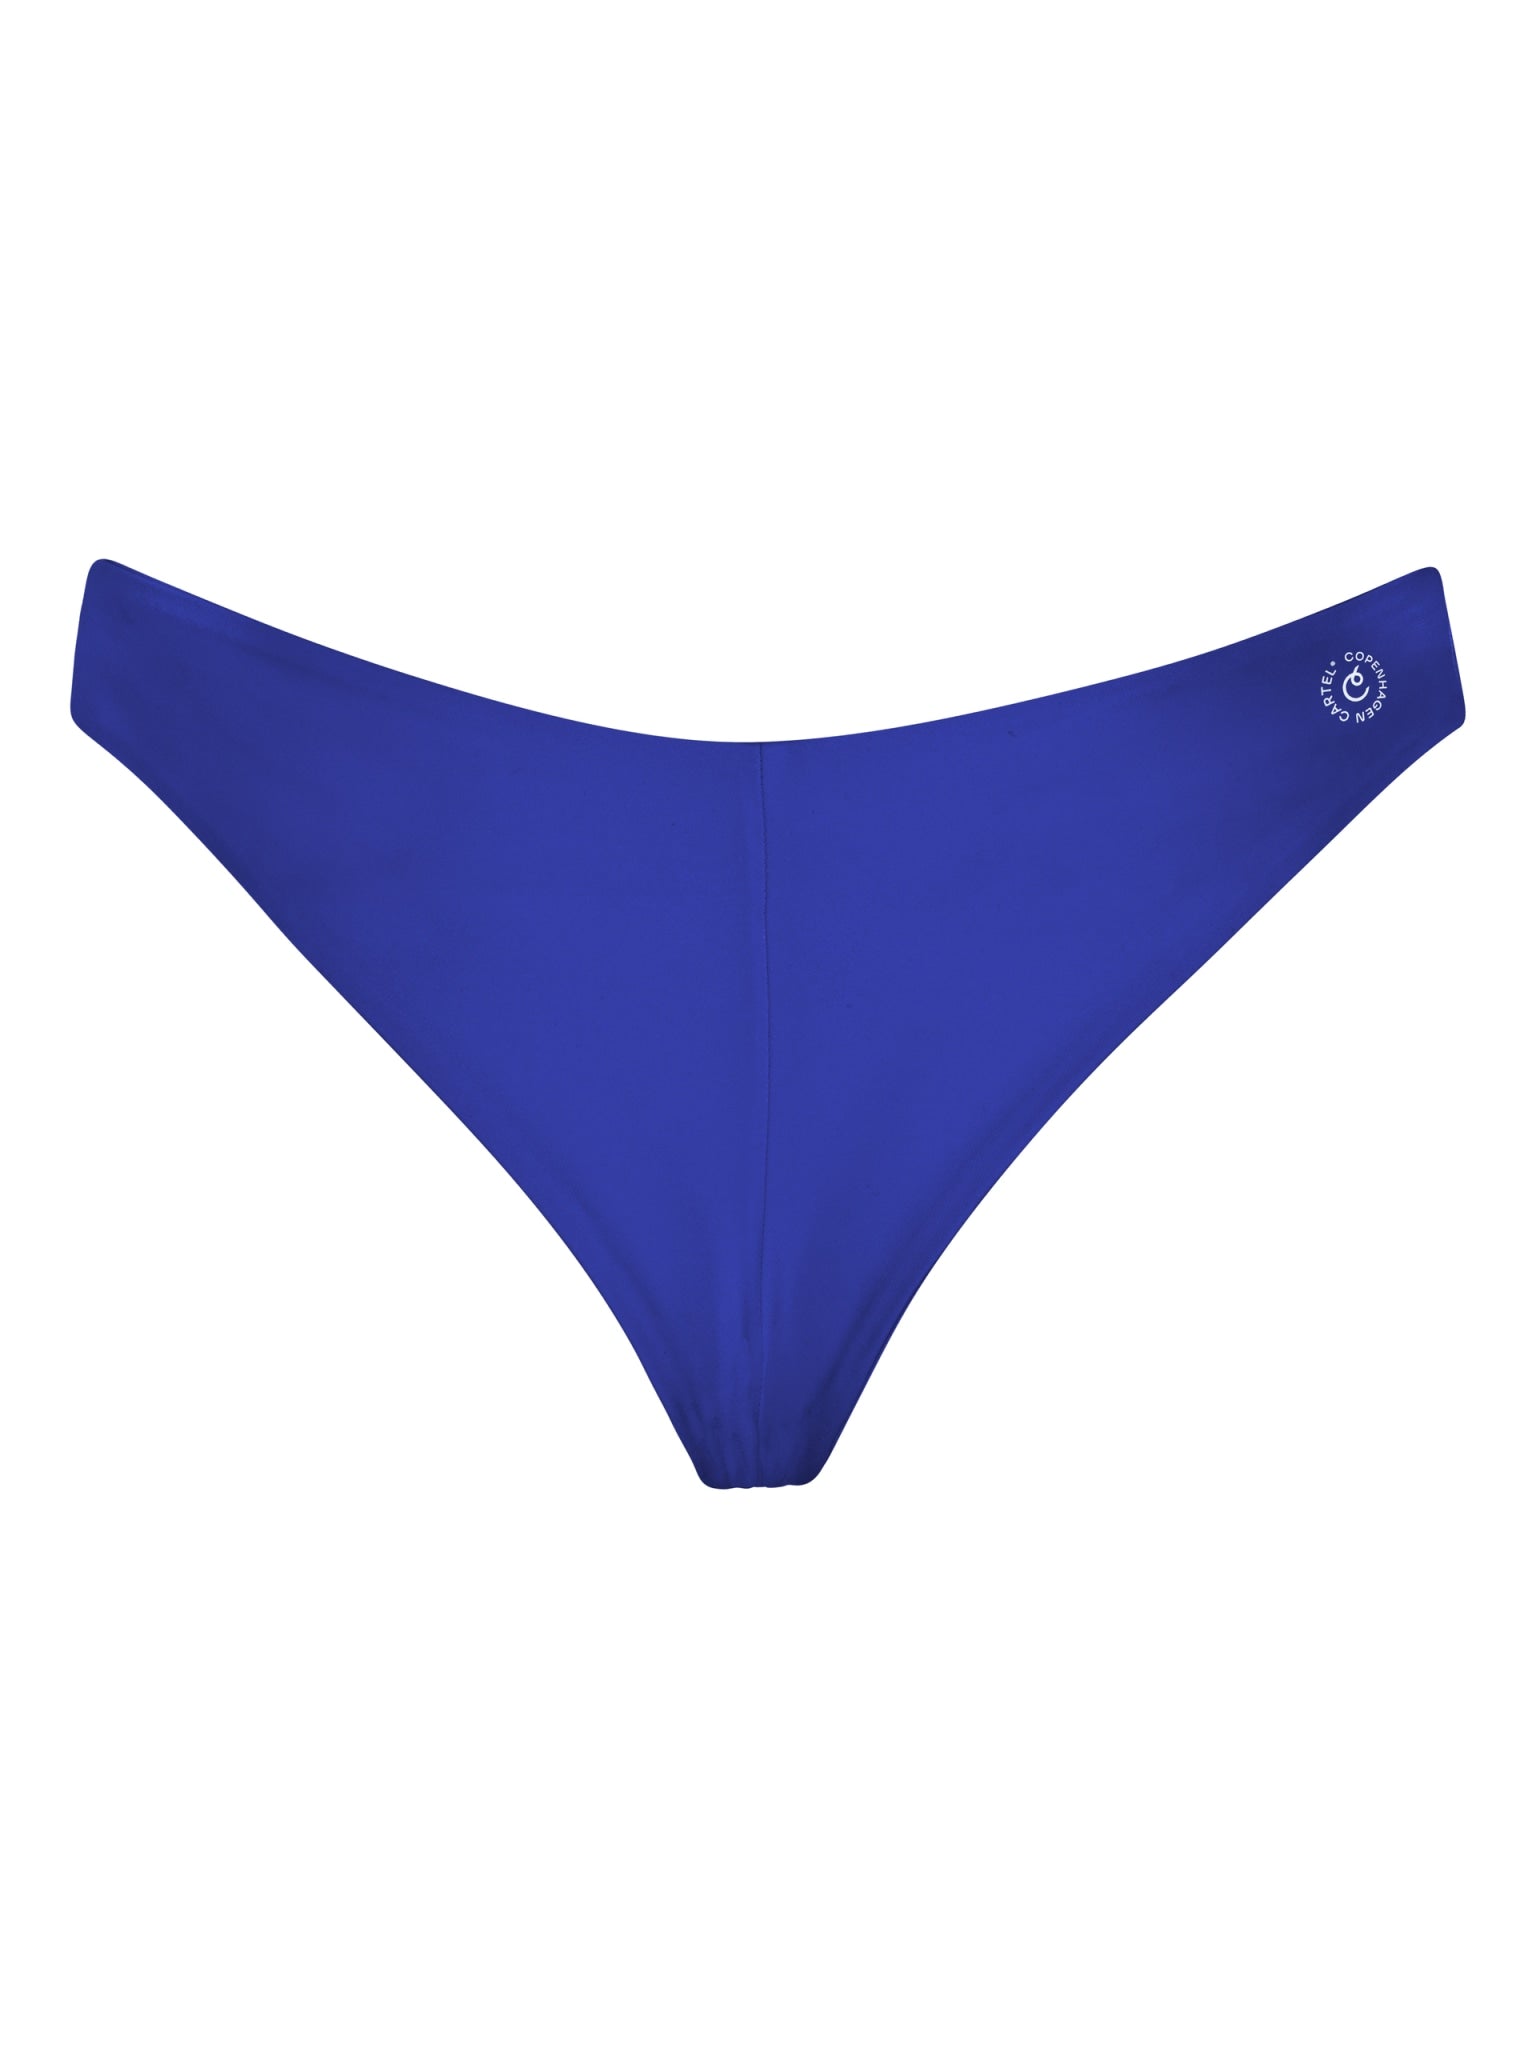 Canggu v-shape bikini bottom - Cartel Blue